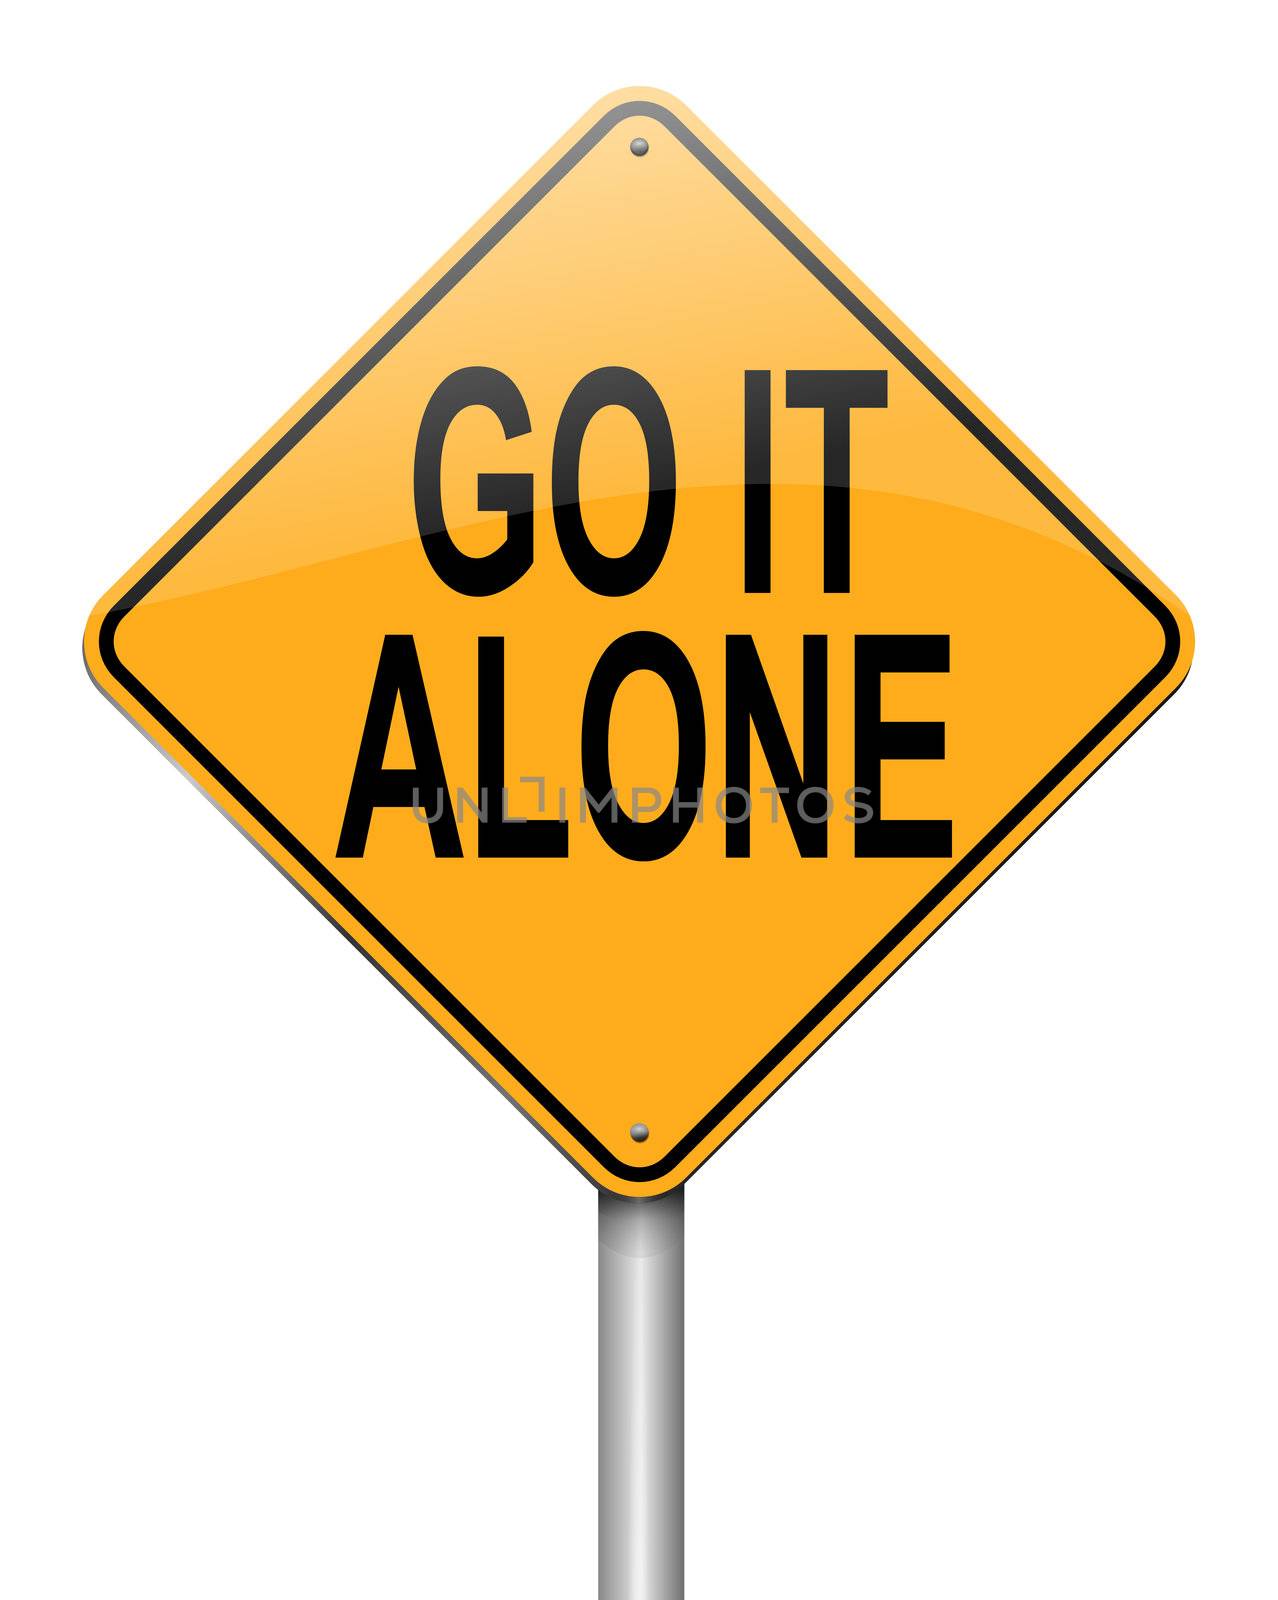 Go it alone. by 72soul